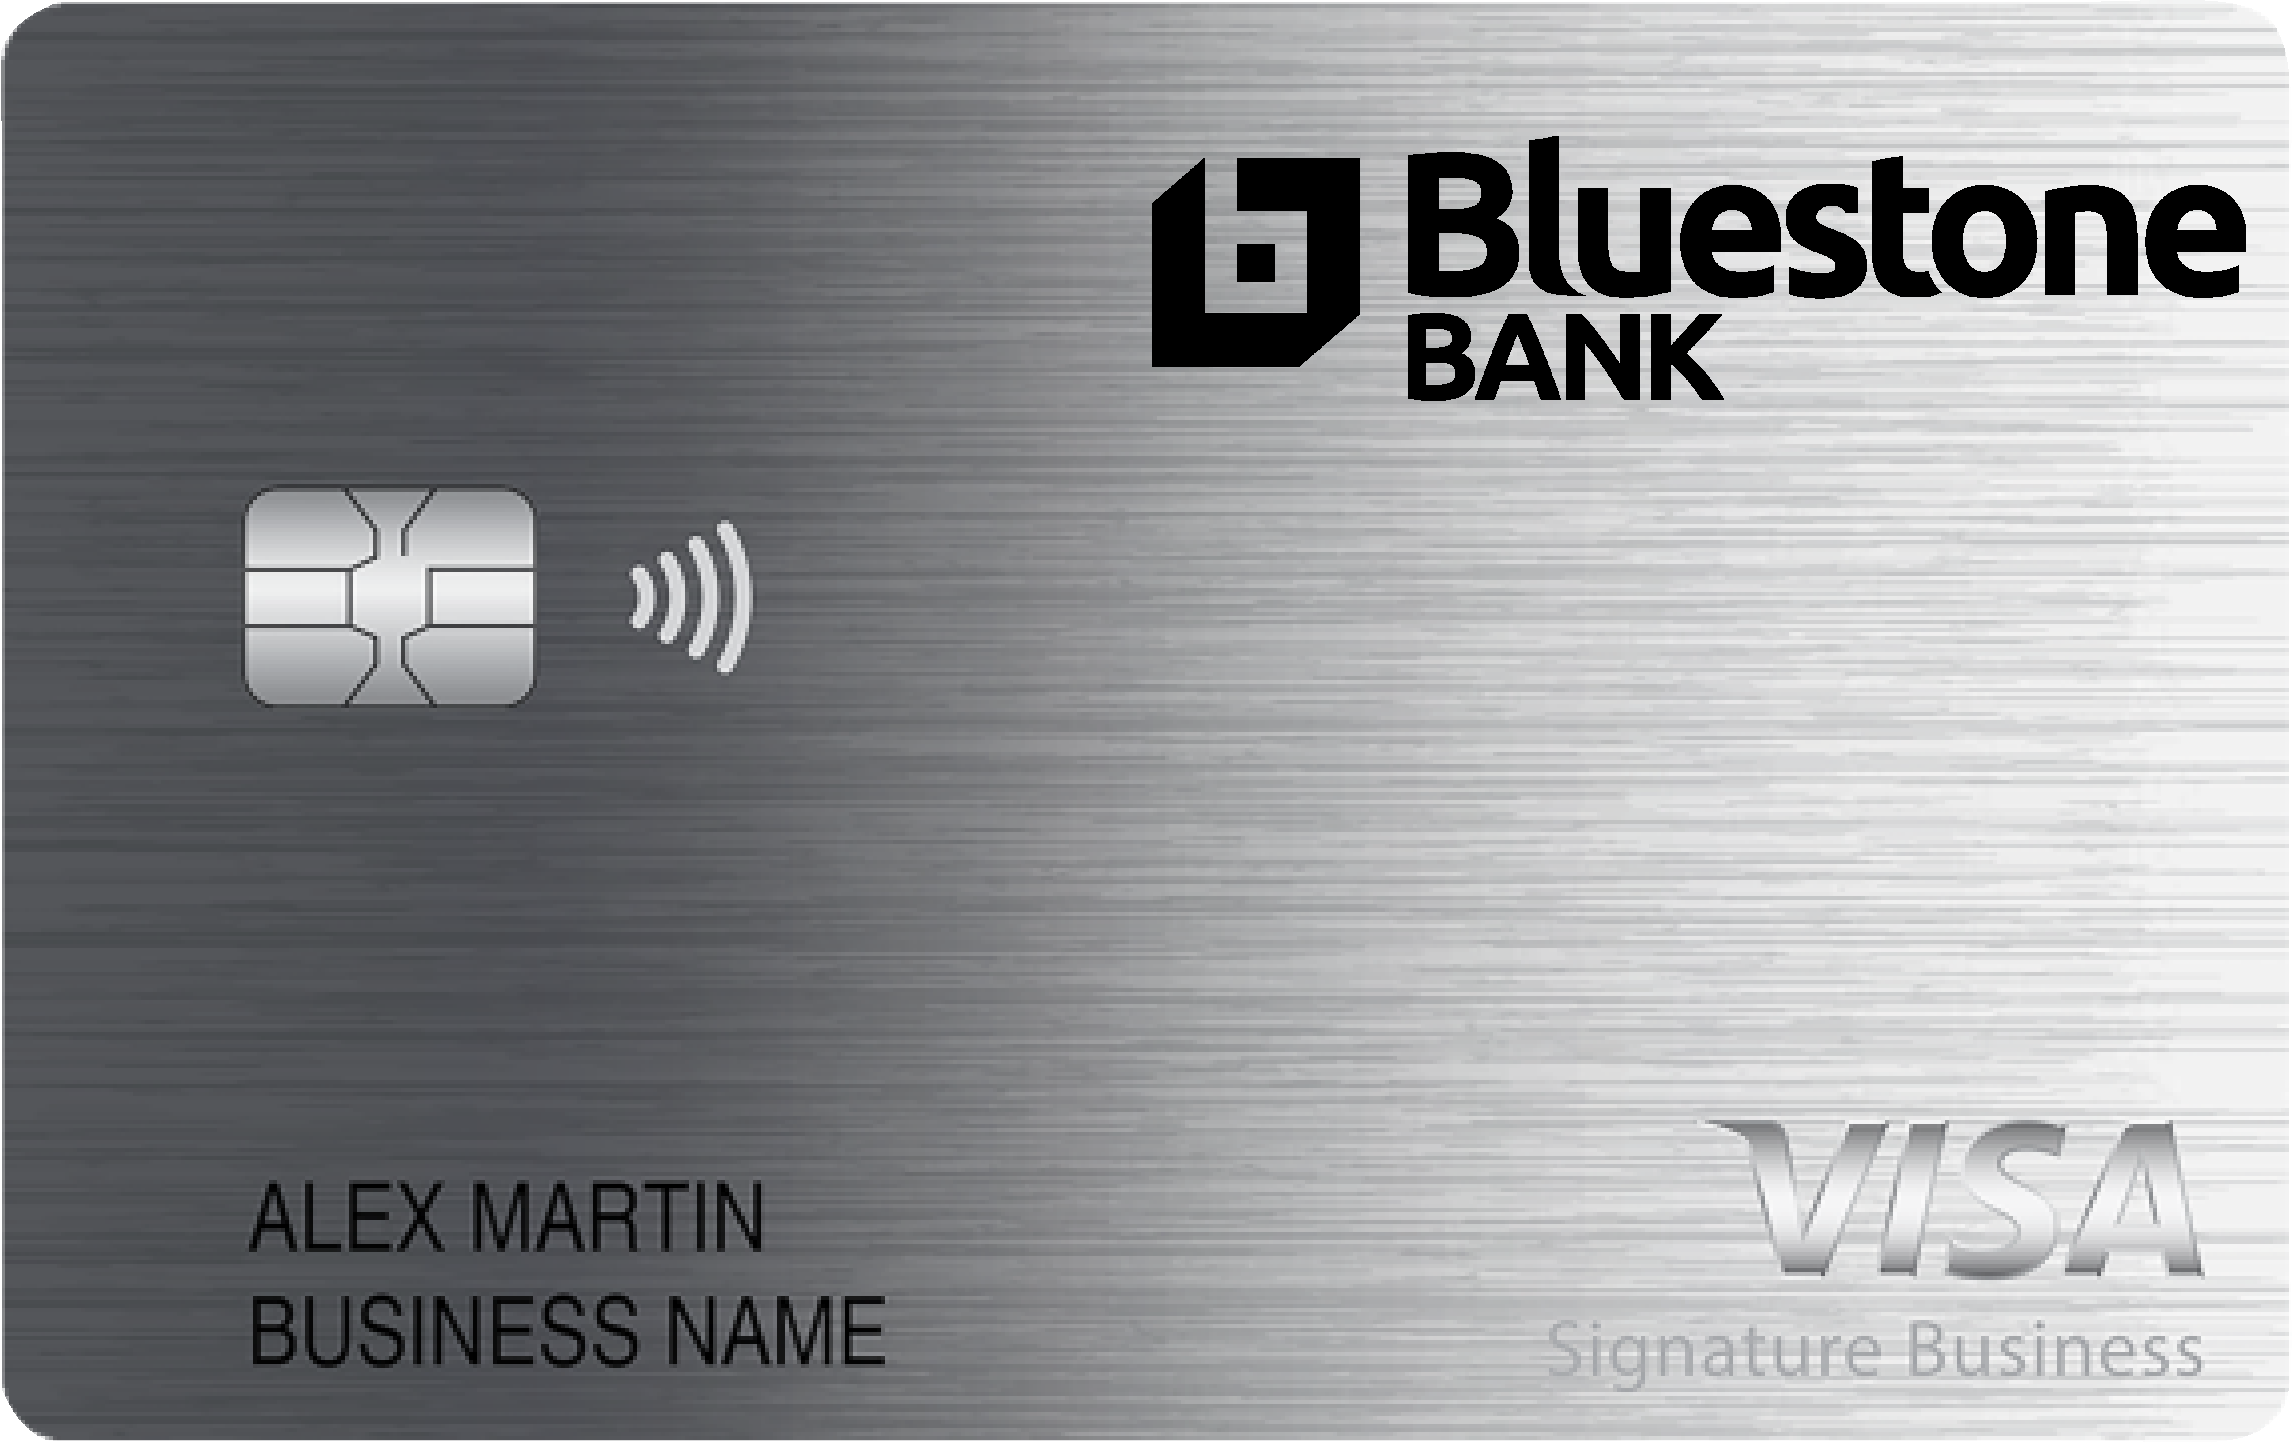 Bluestone Bank Smart Business Rewards Card